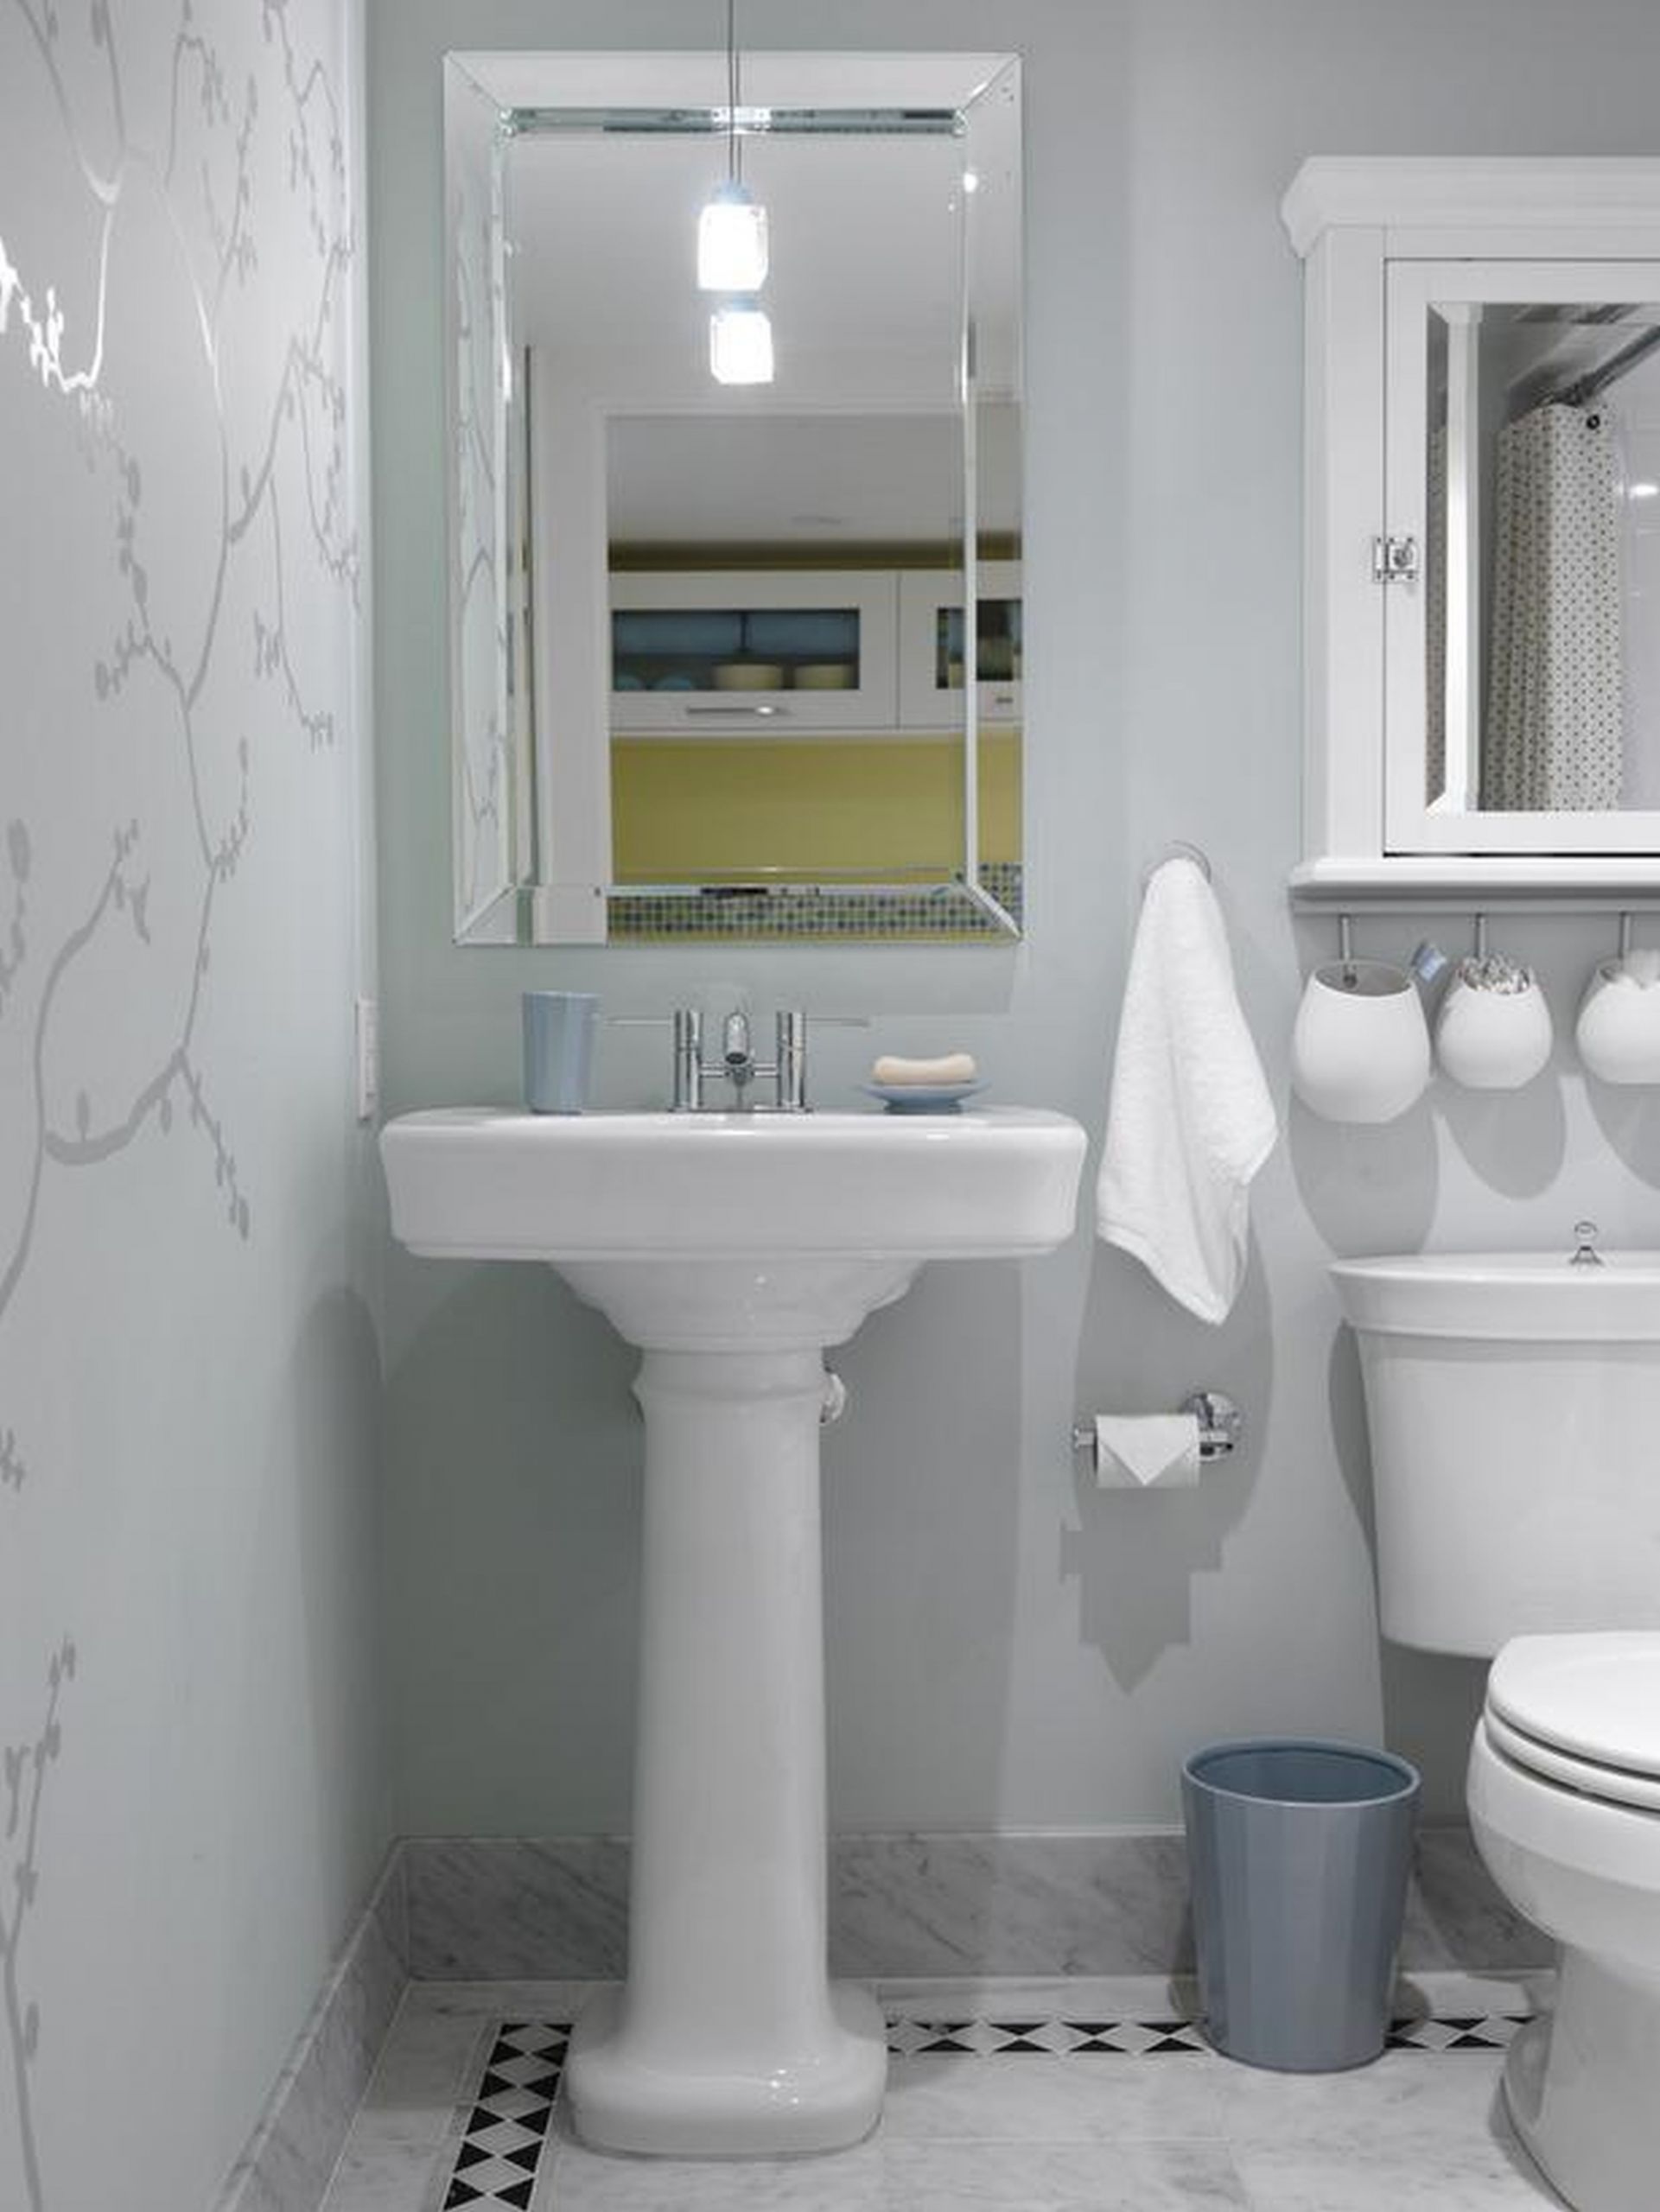 Bathroom Ideas For Small Spaces
 Small Bathroom Space Ideas – HomesFeed